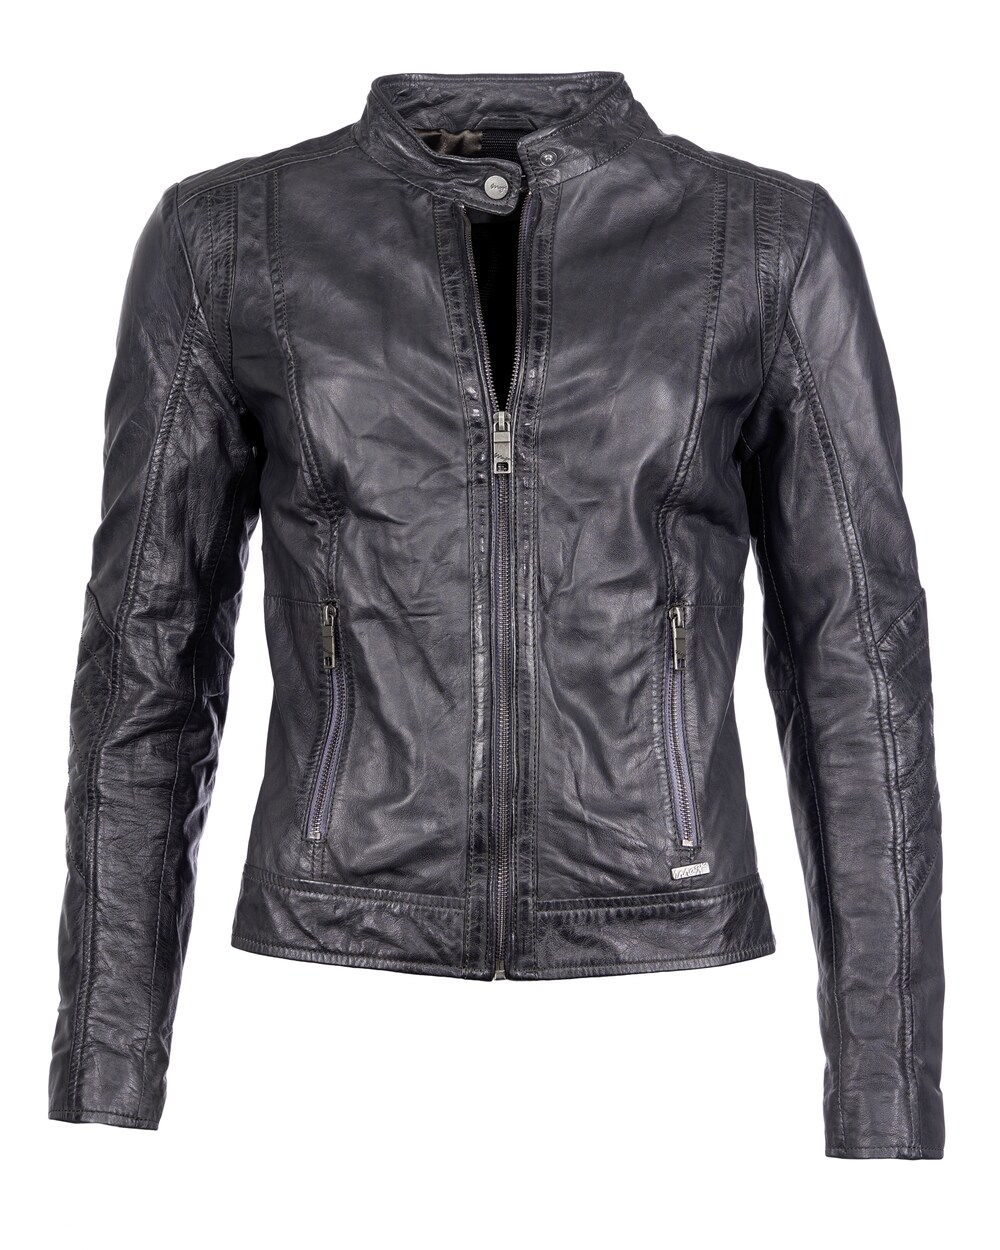 Межсезонная куртка Maze Marcie, базальтовый серый межсезонная куртка maze marcie черный